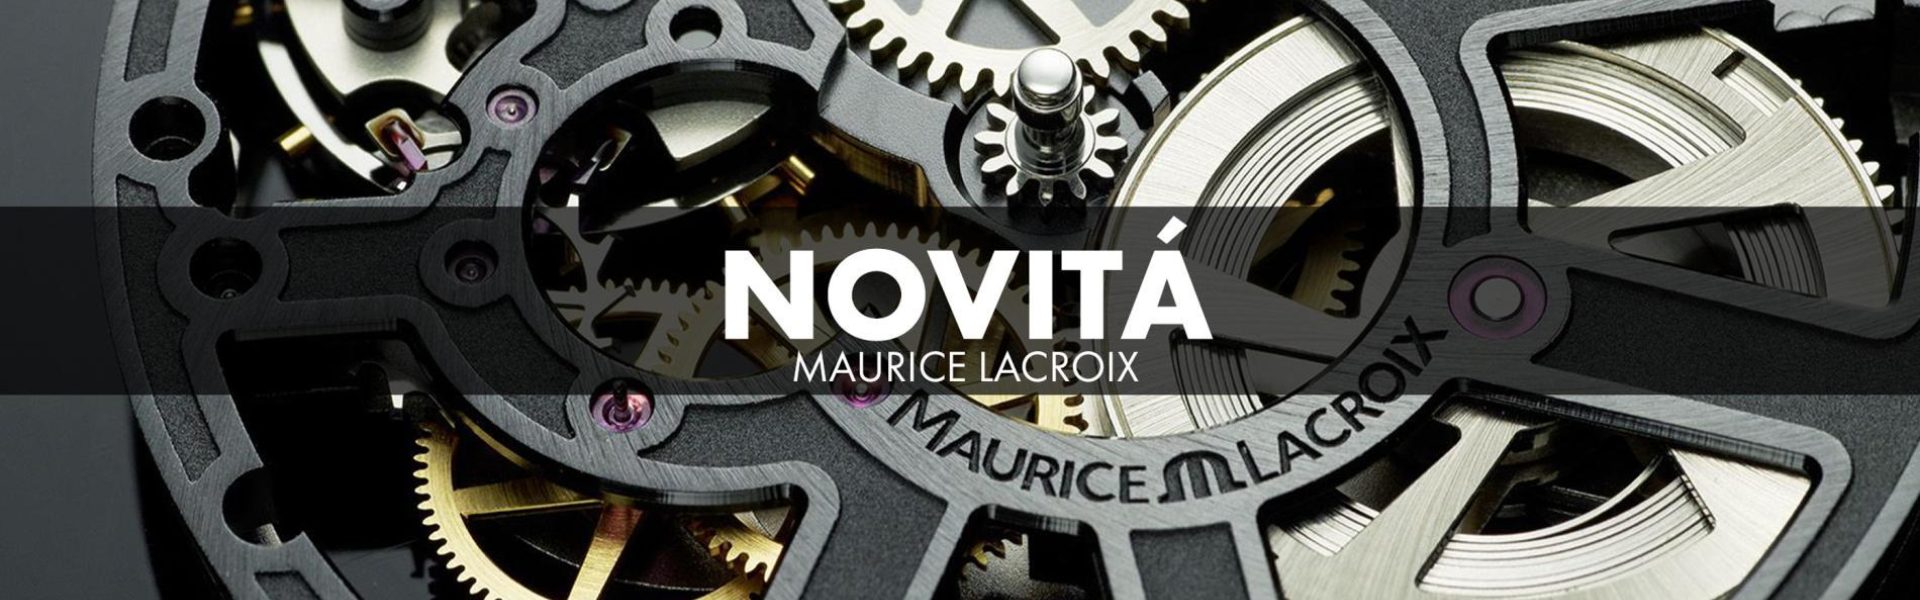 Maurice Lacroix Novita2022